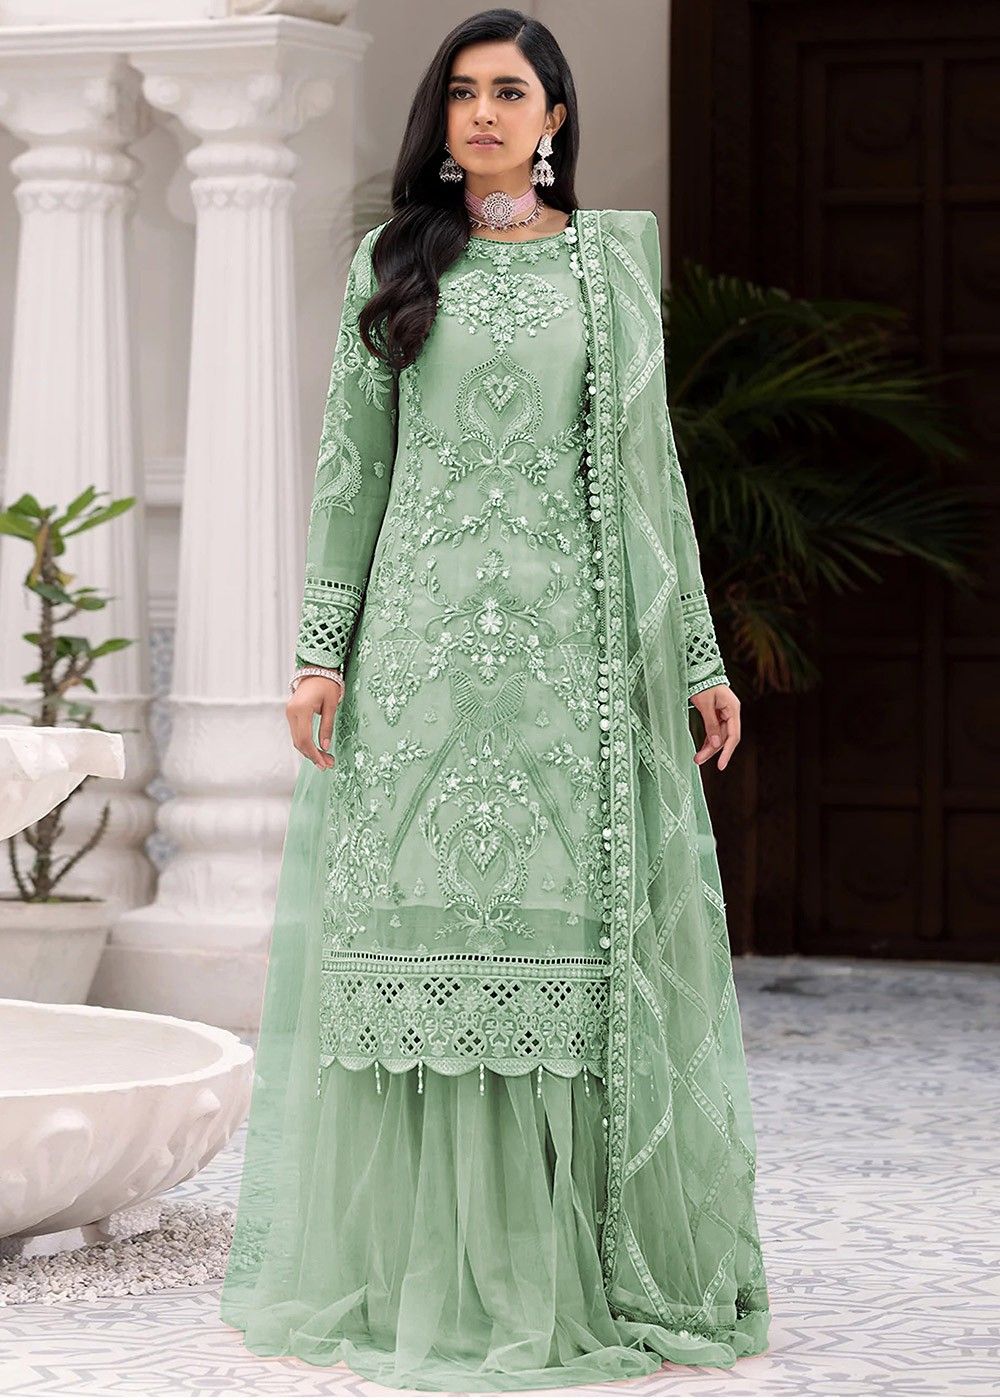 Top more than 151 net kurti dress